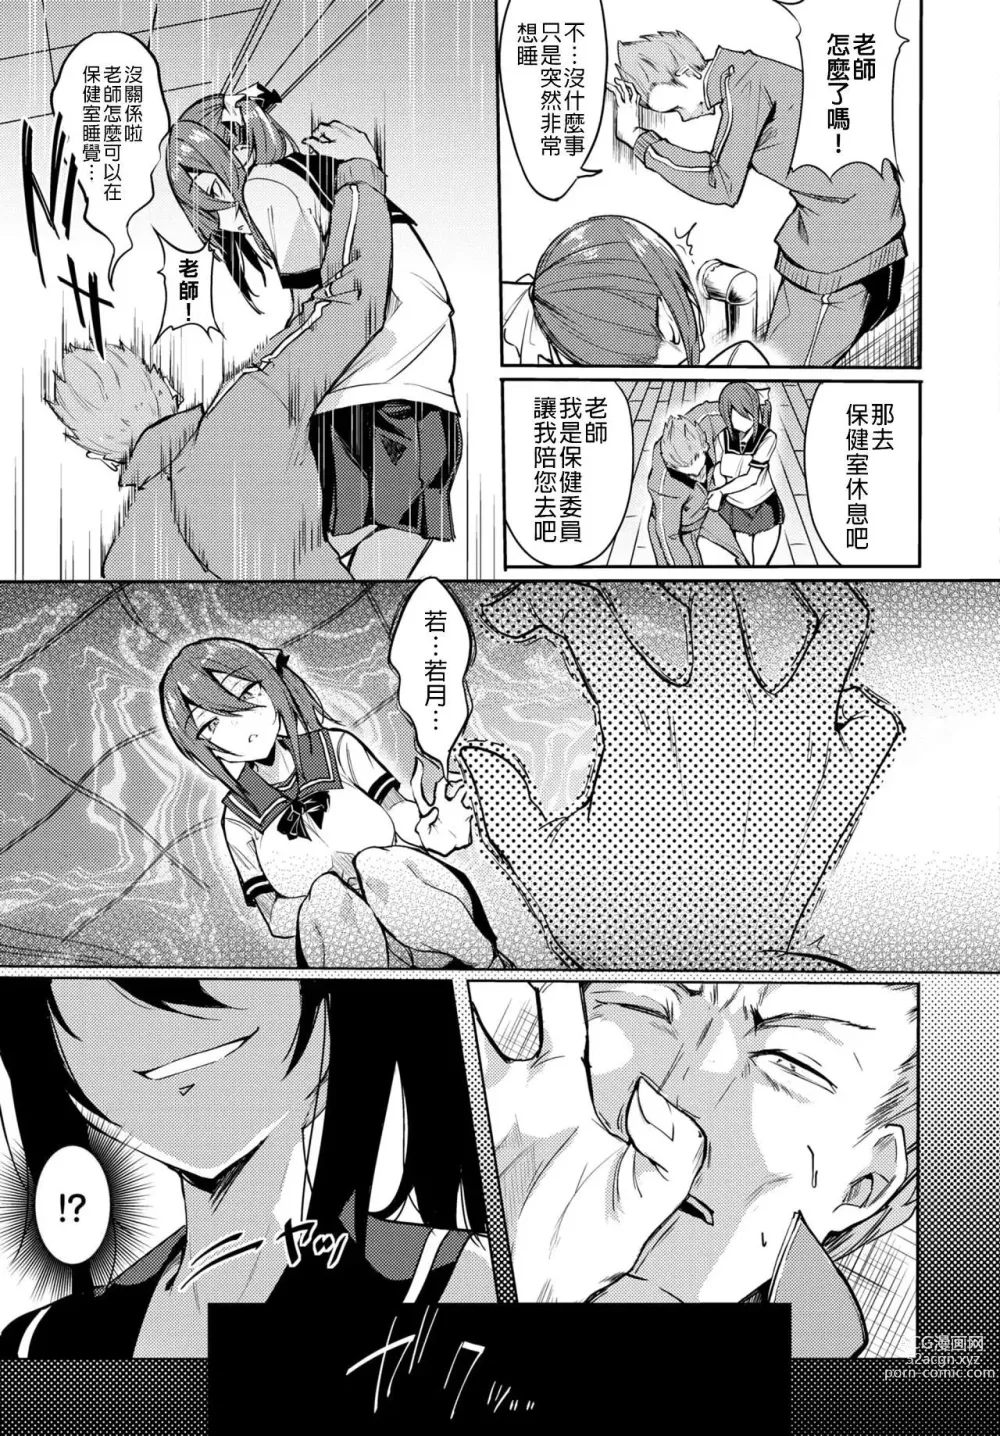 Page 7 of manga 黏呼呼的食譜 (uncensored)